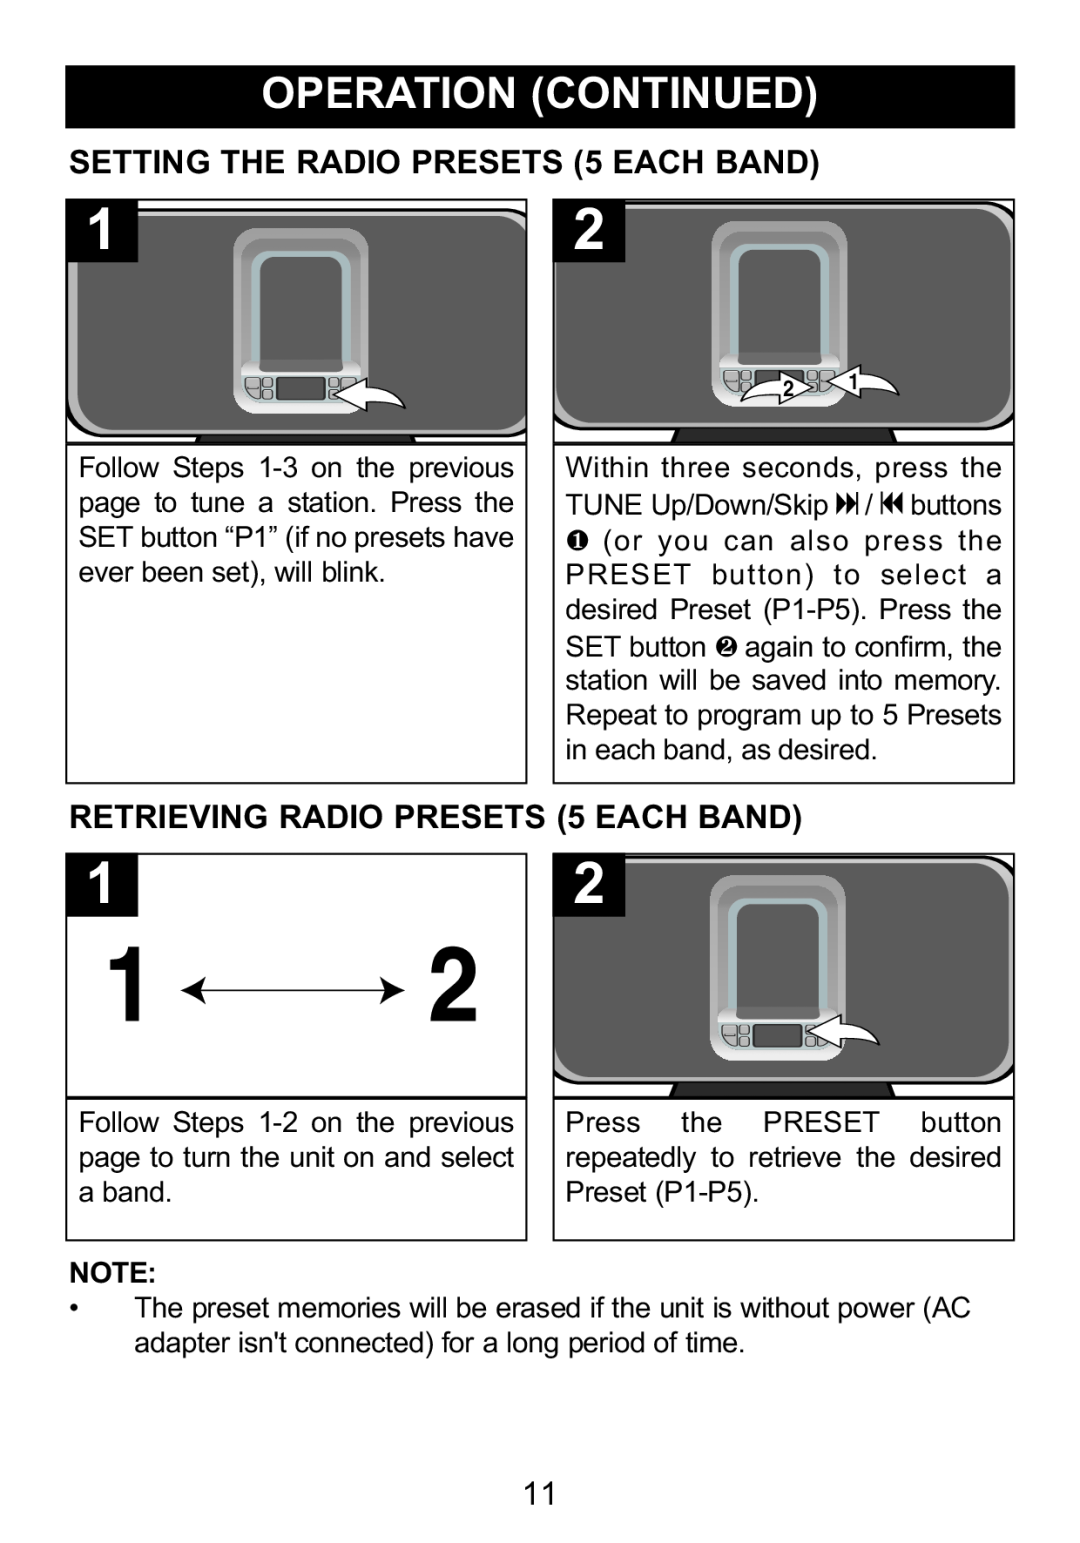 Memorex Mi1006 manual SETTING THE RADIO PRESETS 5 EACH BAND, RETRIEVING RADIO PRESETS 5 EACH BAND 